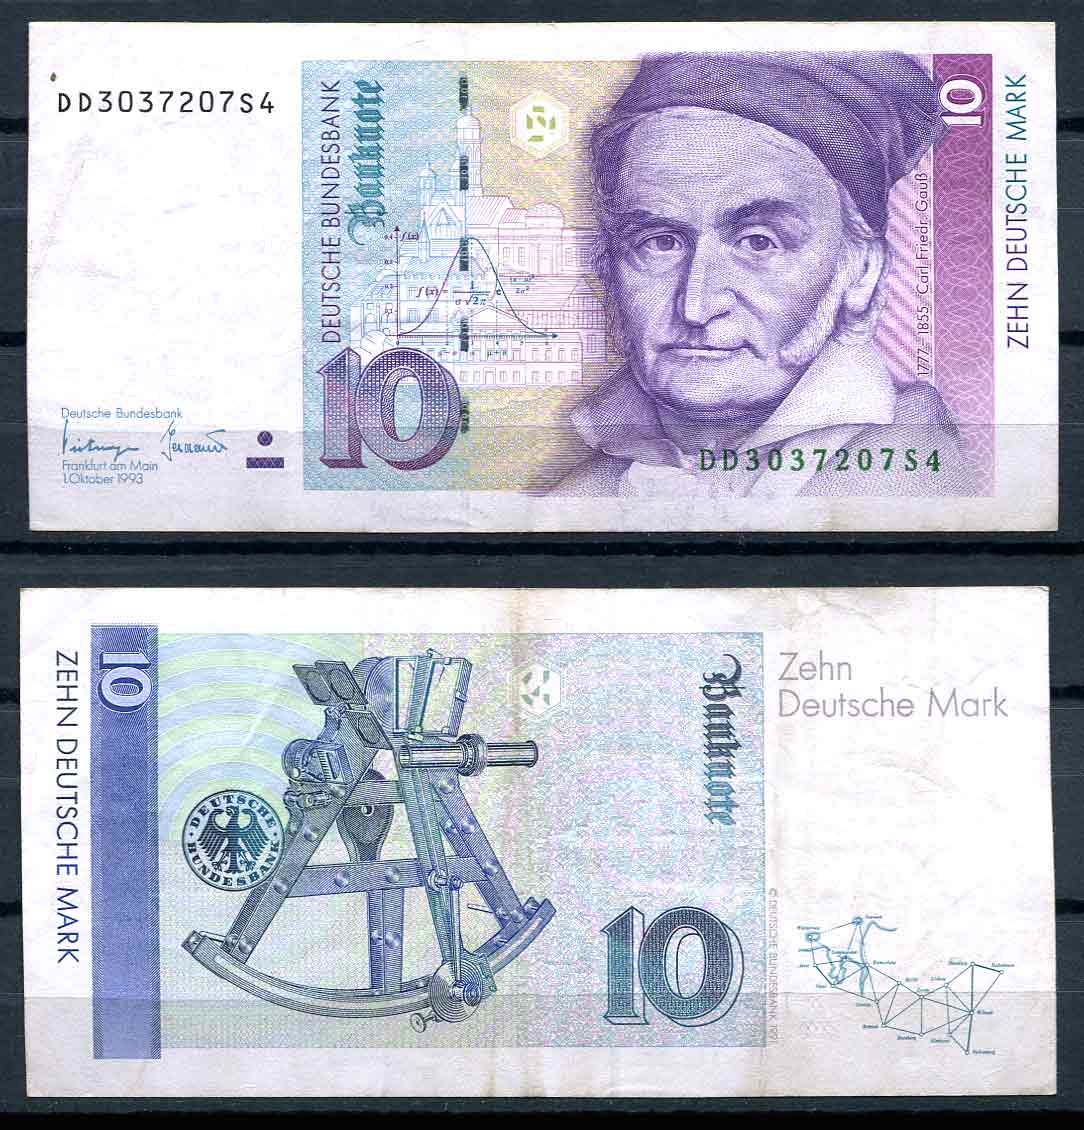 Deutsche mark. Валюта Германии марка. Немецкая марка банкноты. Немецкие марки деньги. Современные банкноты Германии.